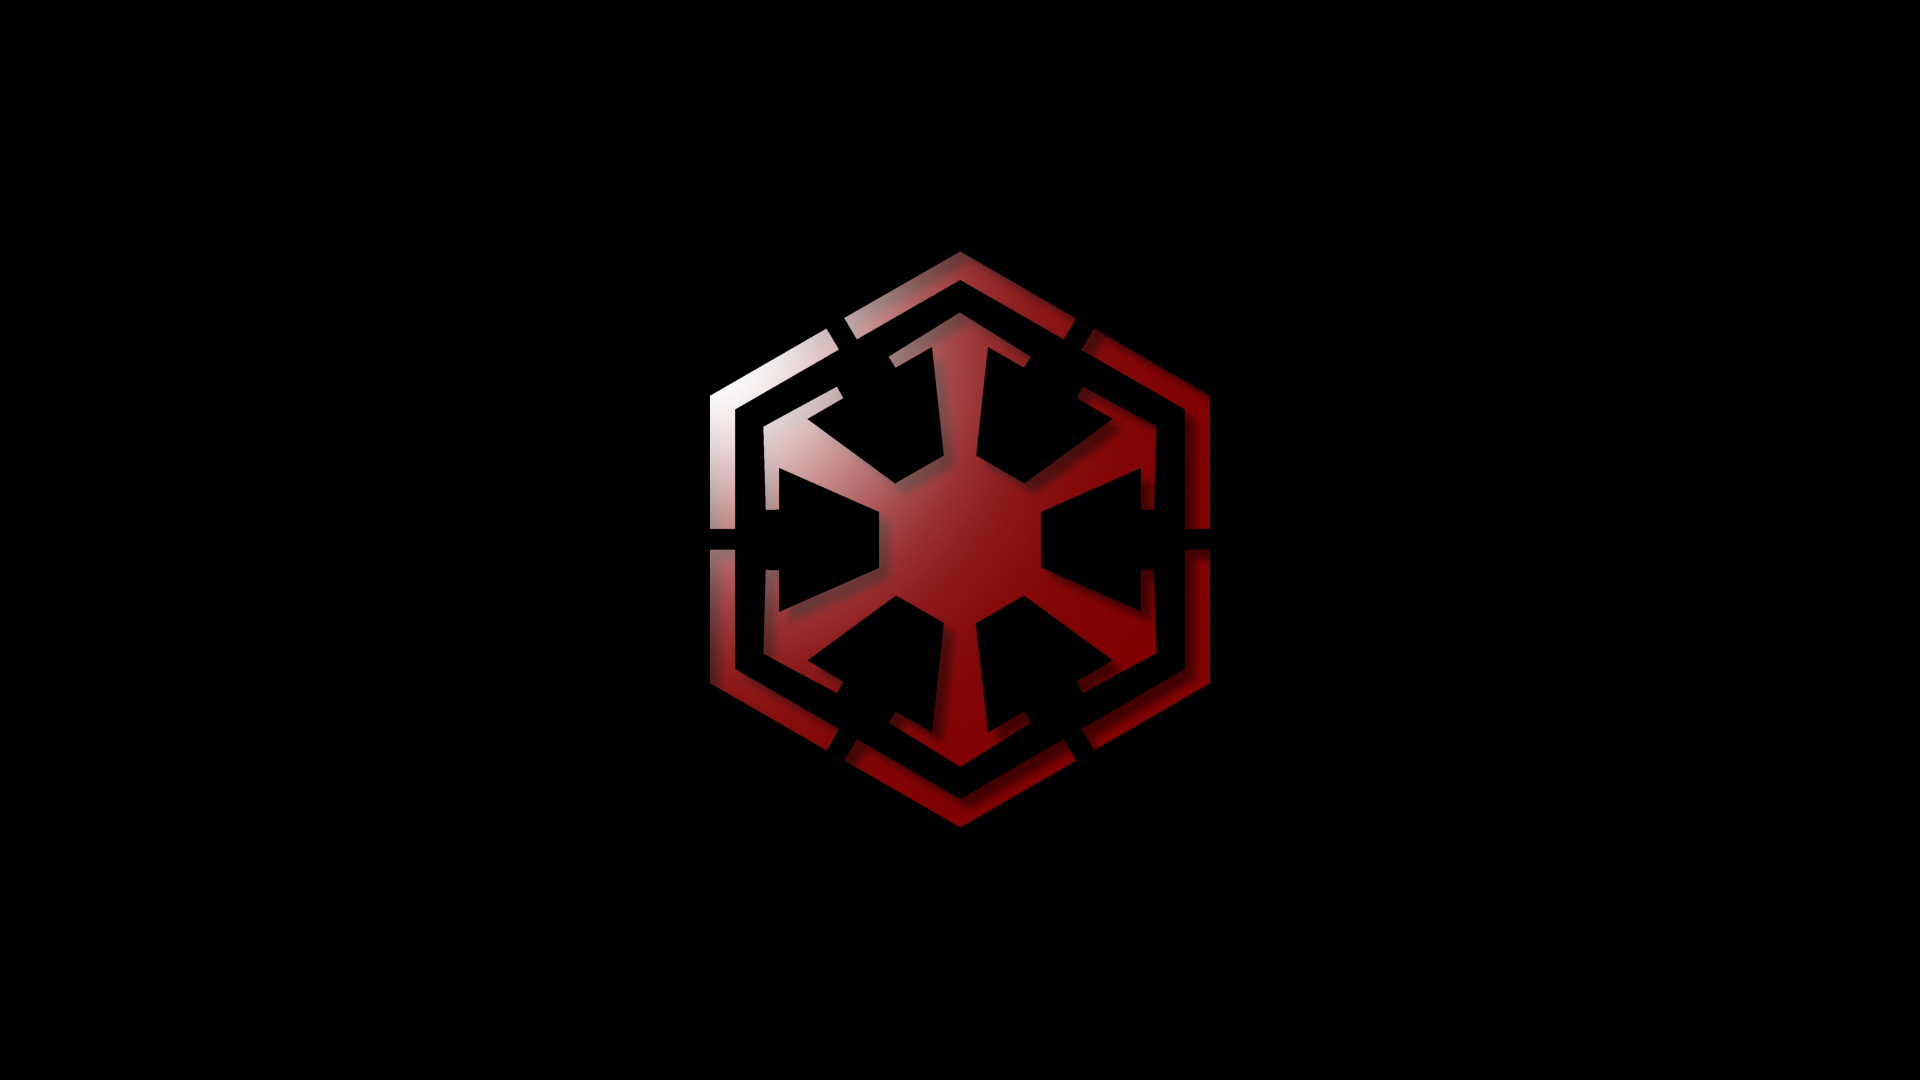 sith empire symbol star wars